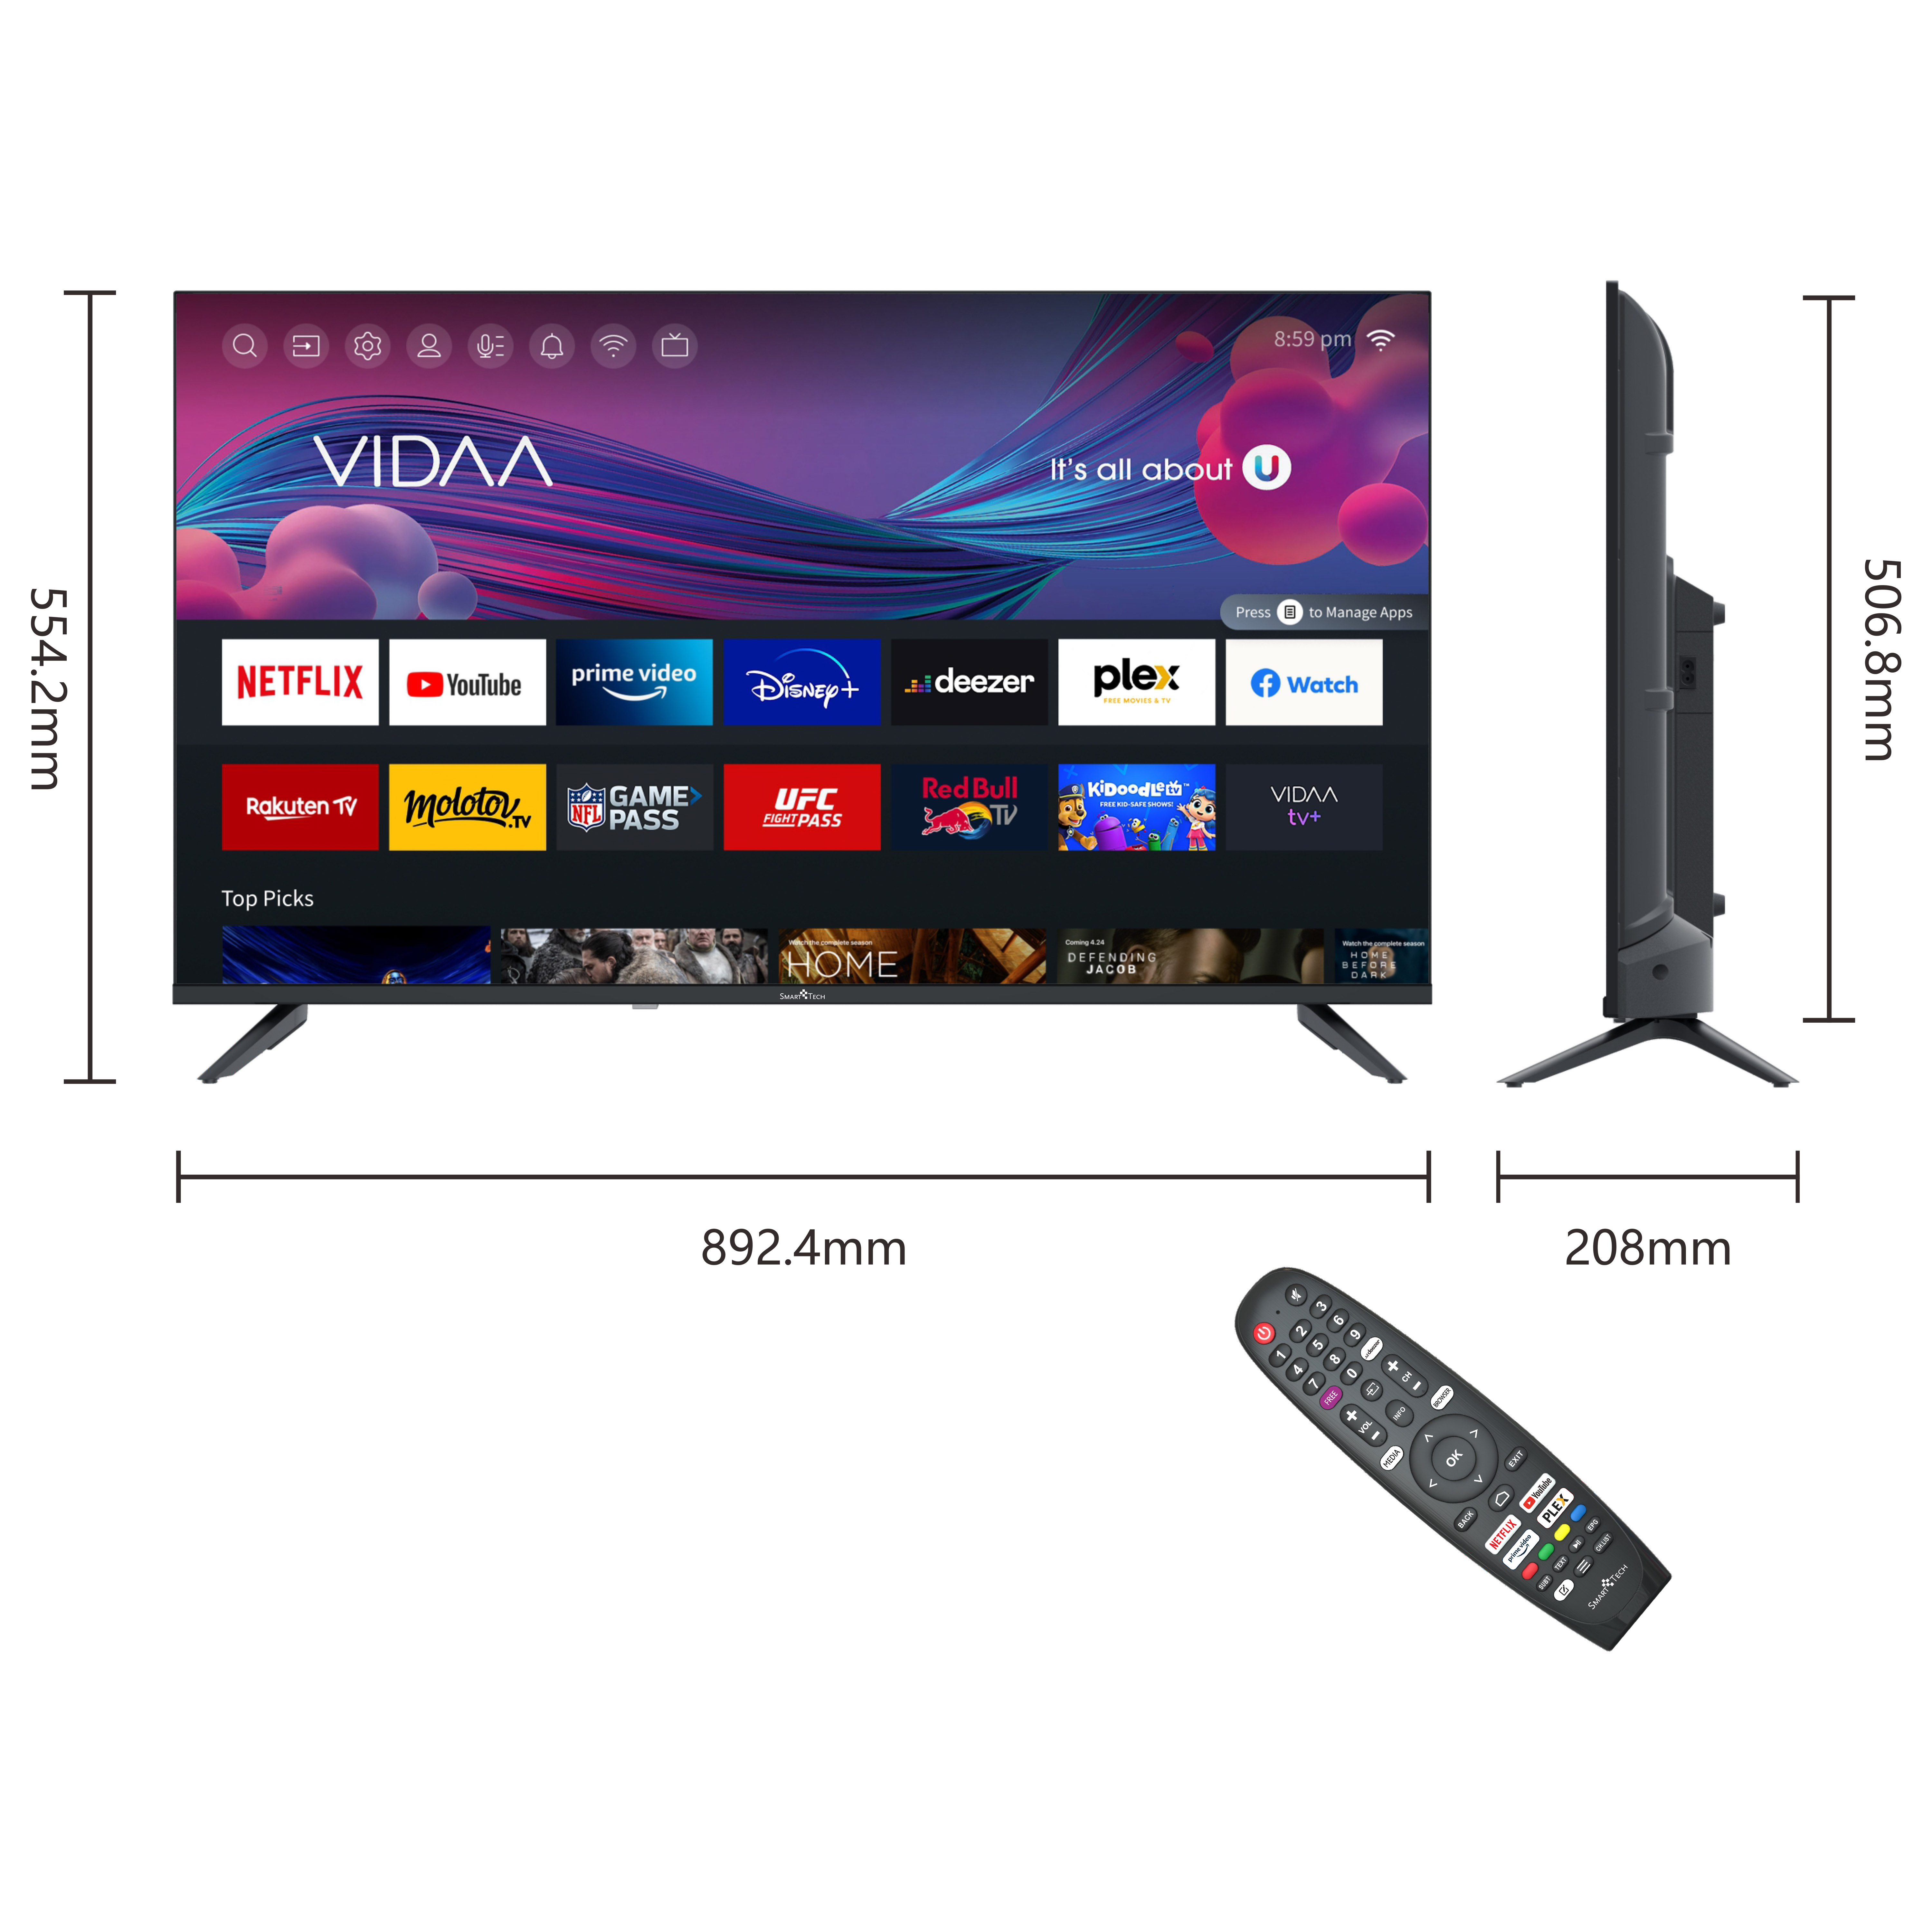 SMART TECH 40 Zoll Vidaa 40FV10V1 TV, TV Zoll cm, 40 Full-HD, LED SMART TV / Linux4.19) 101 (Flat